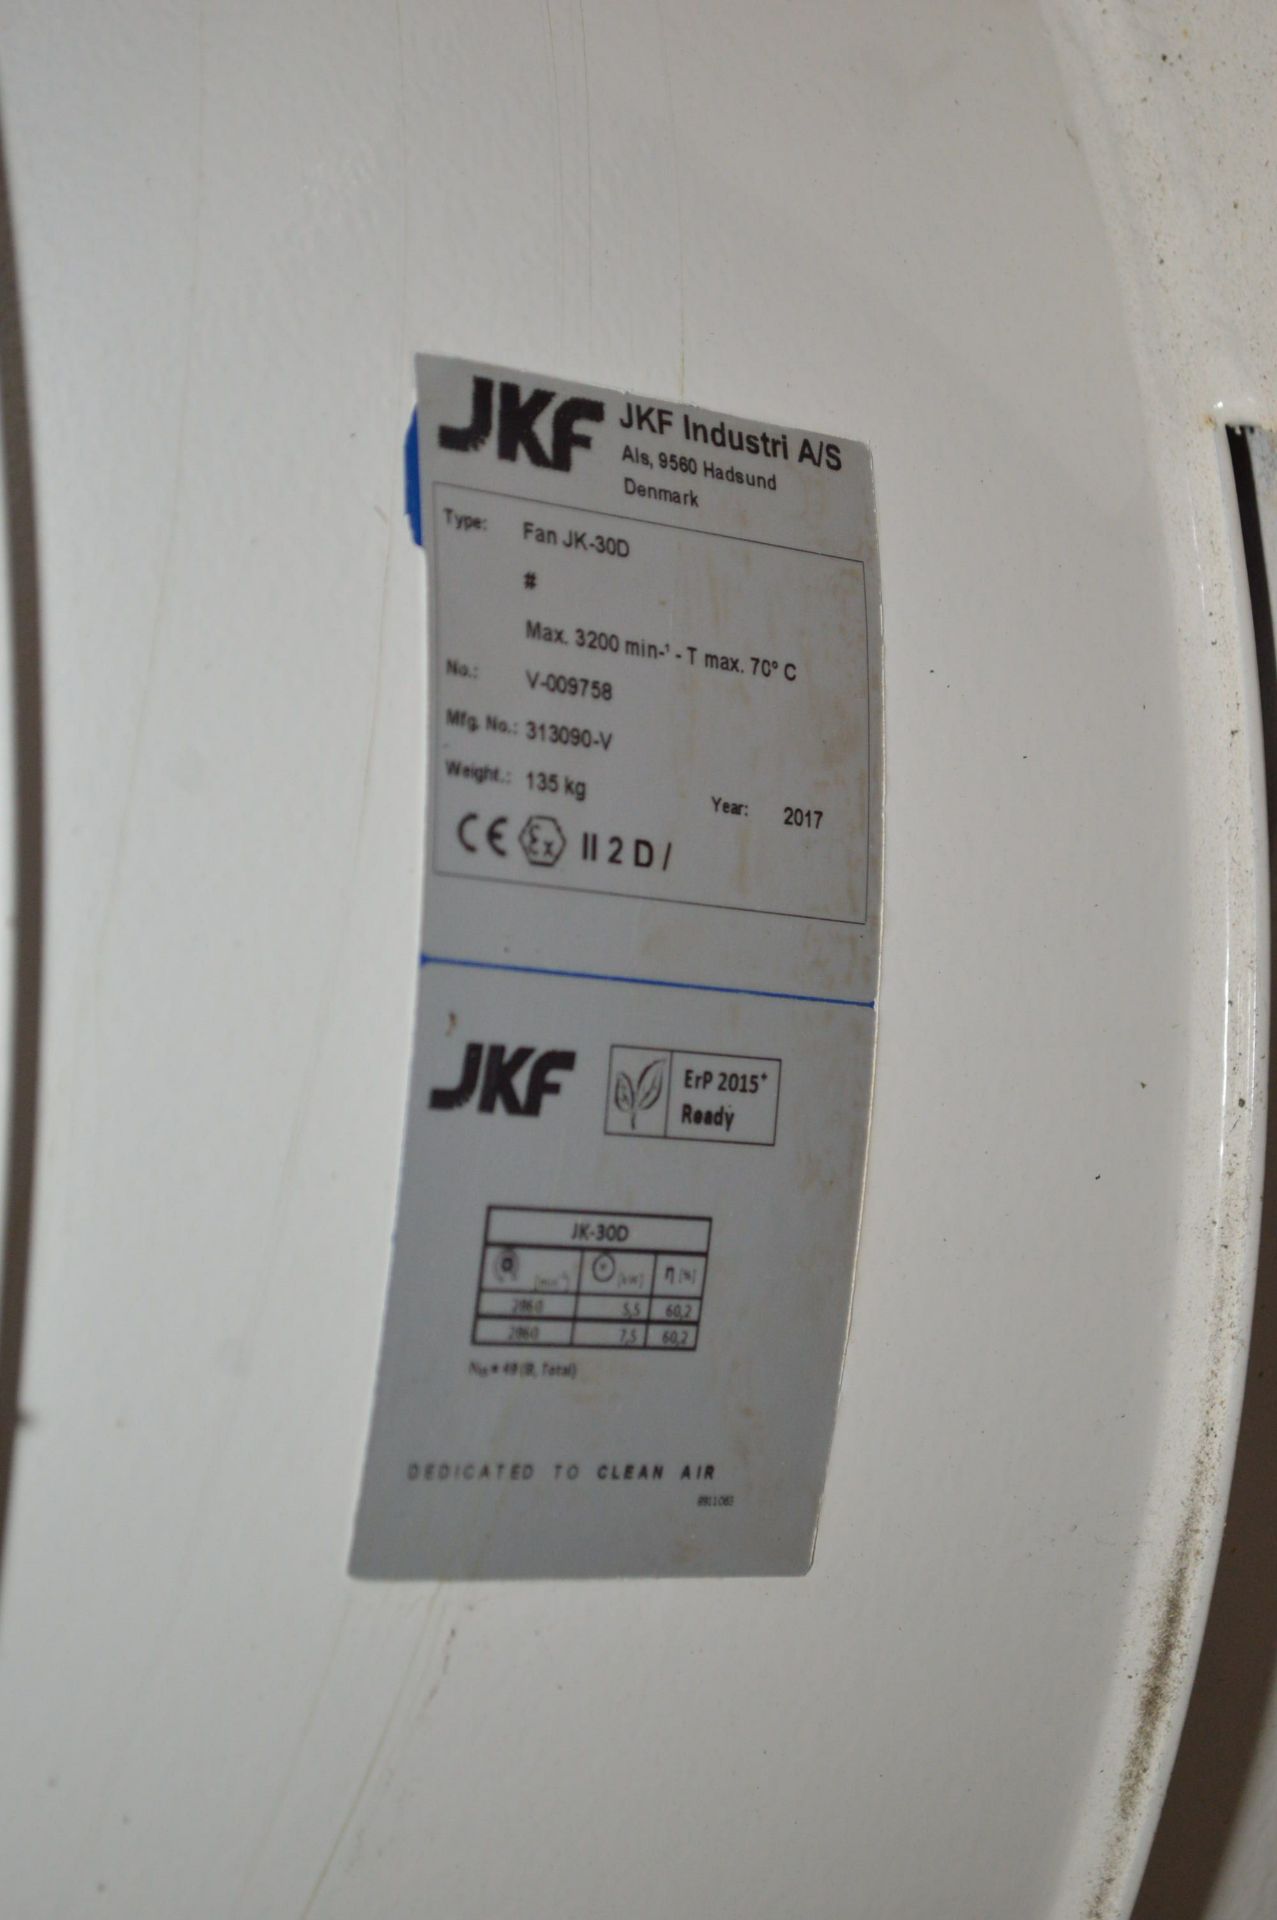 JKF JK-300 Steel Cased Centrifugal Fan, serial no. 313090-V, year of manufacture 2017, (unused), - Bild 3 aus 3